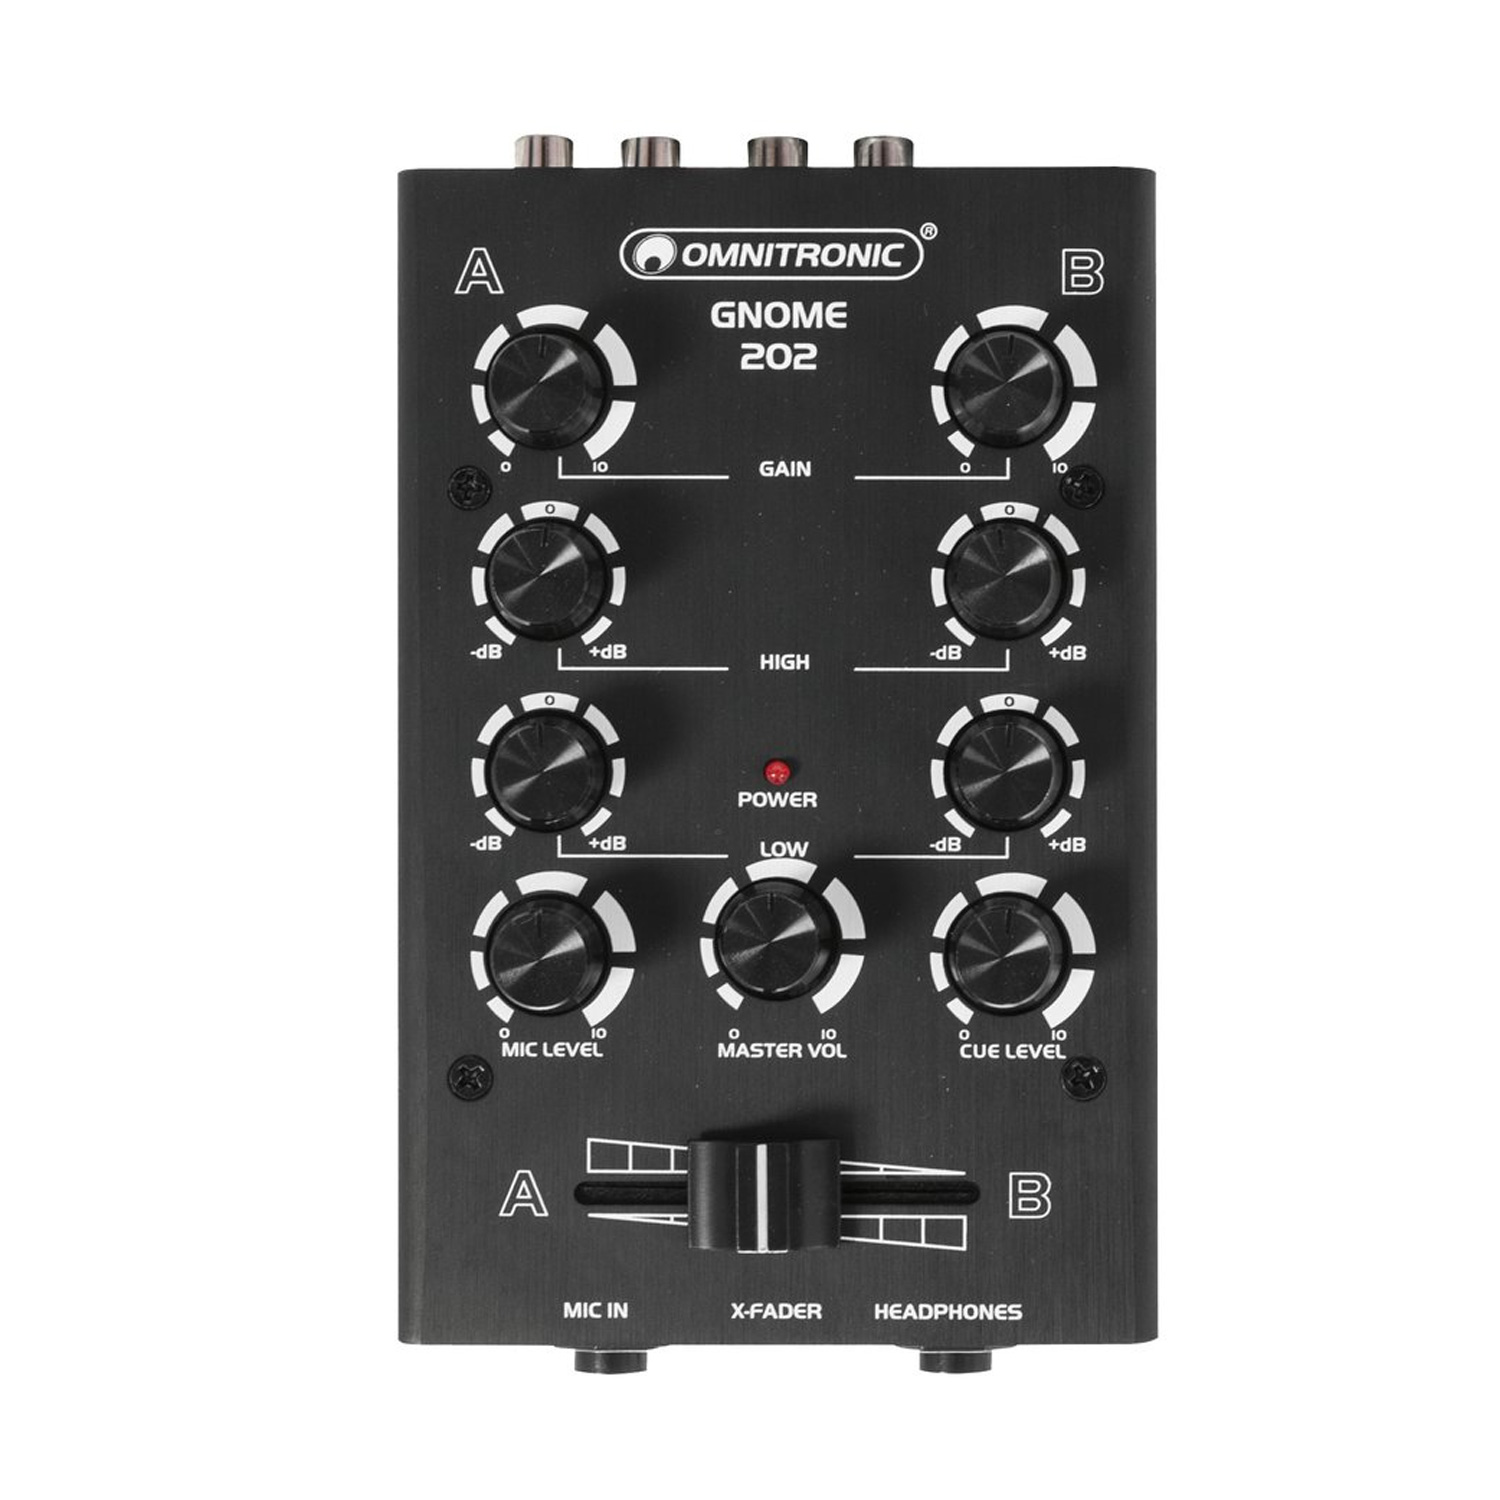 Kompakt DJ Mixer GNOME-202 Mini-Mixer schwarz - 2 Kanäle von Omnitronic